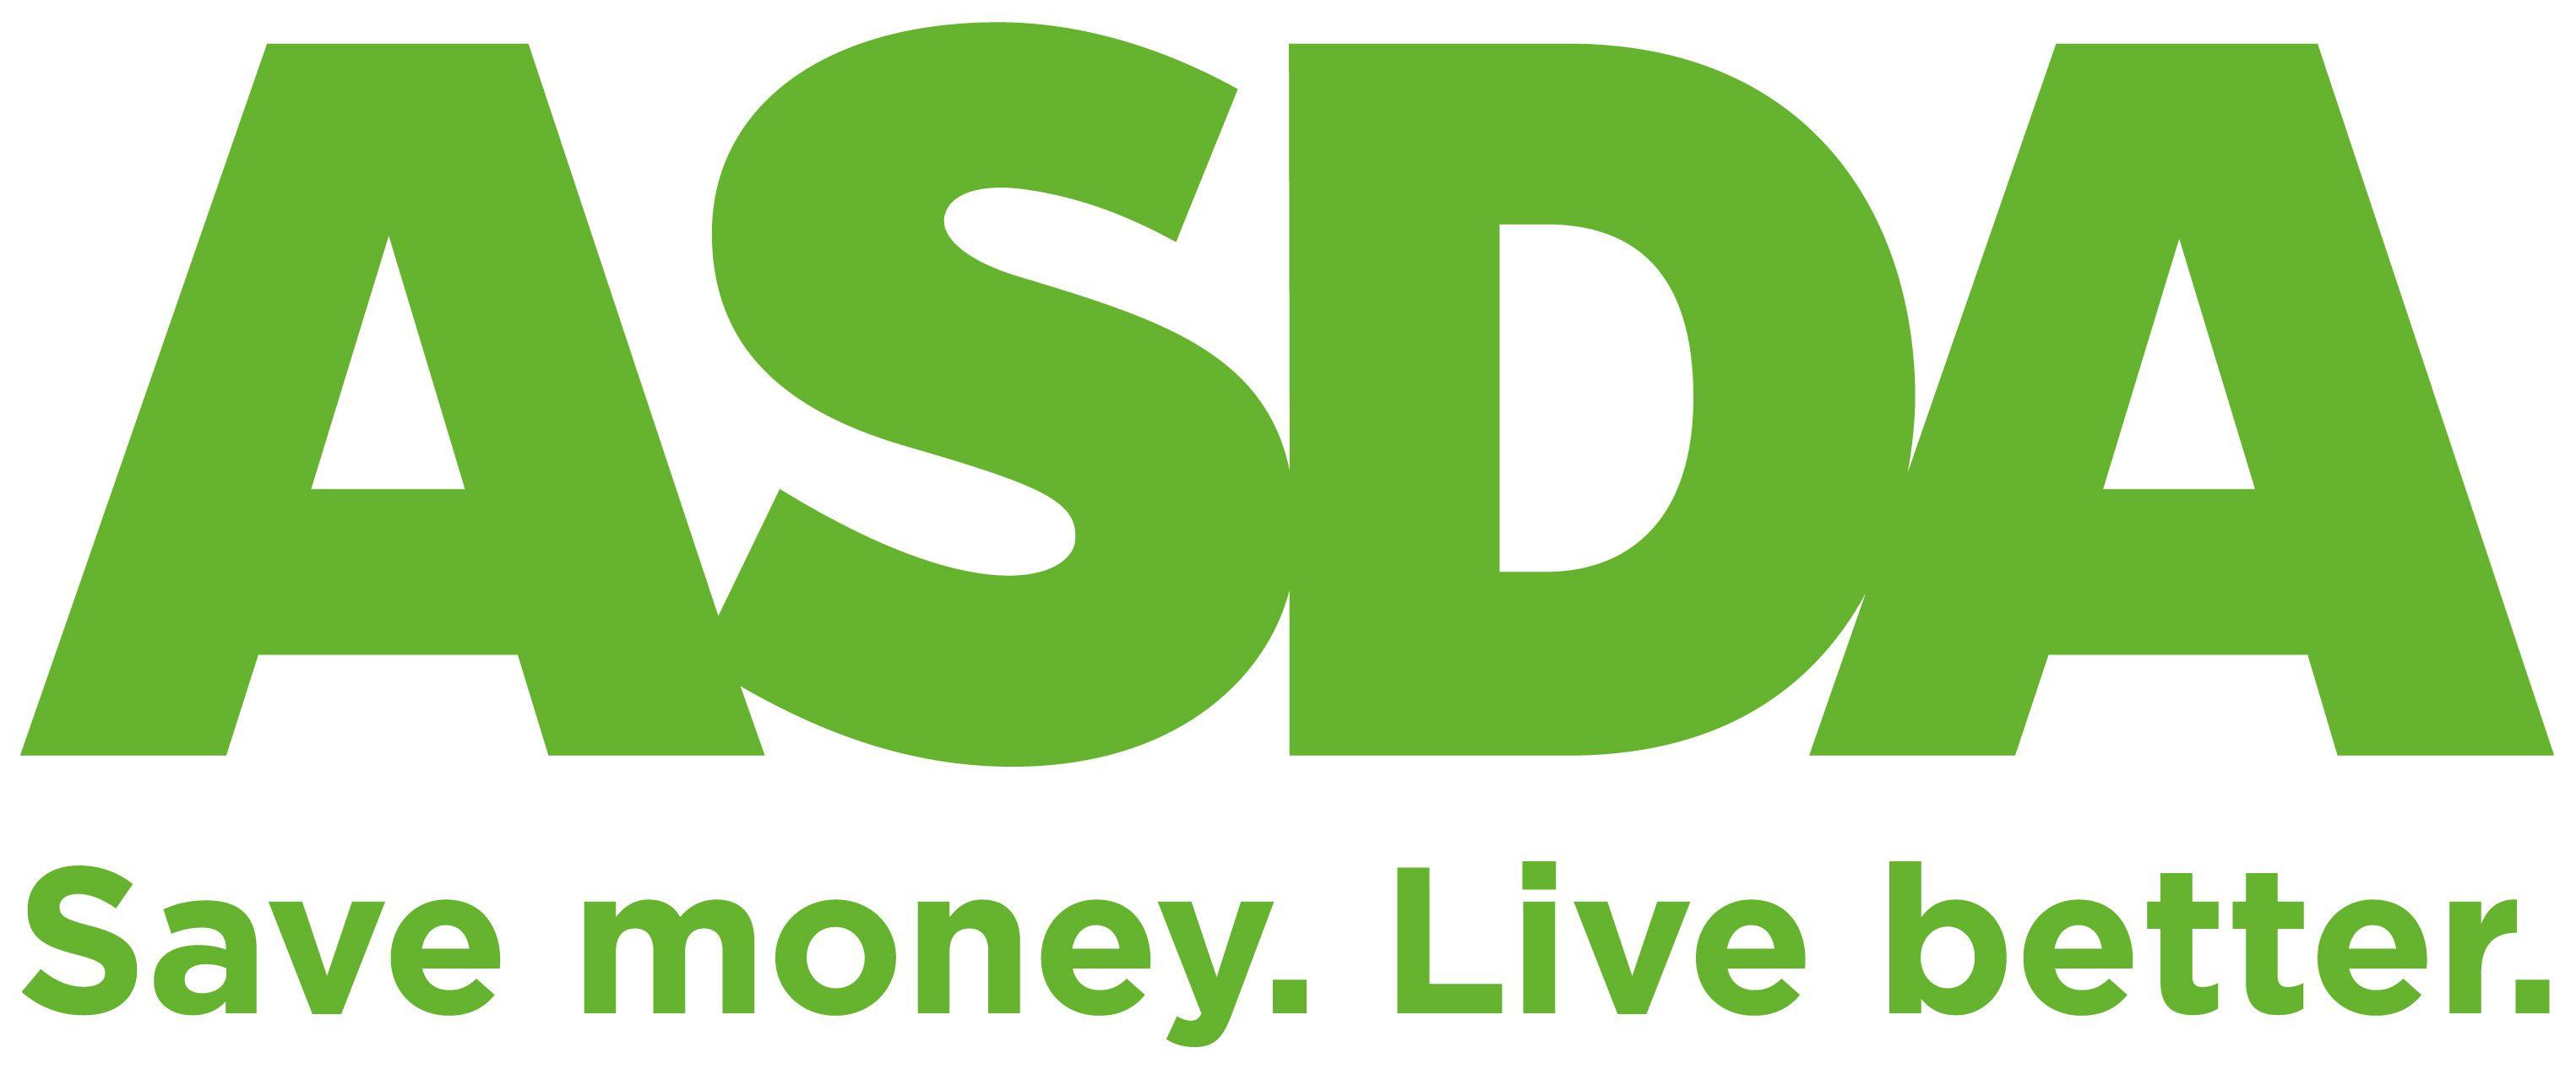 Walmart.com Save Money Live Better Logo - Our History - ASDA Corporate